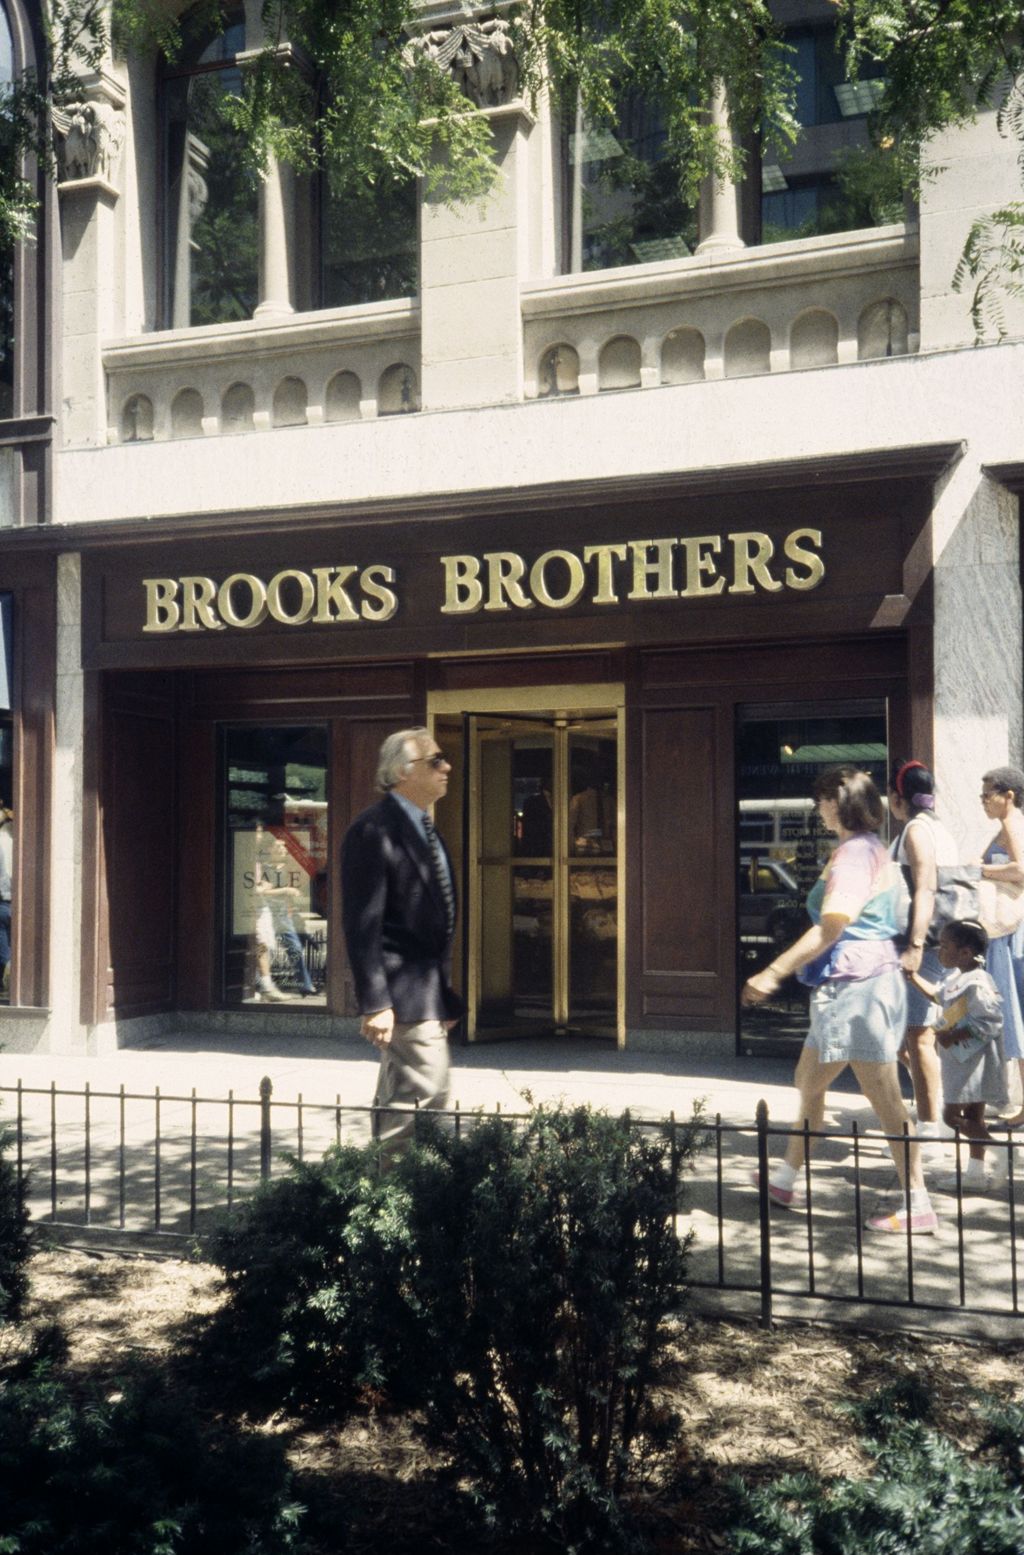 Miniature of Brooks Brothers store, North Michigan Avenue